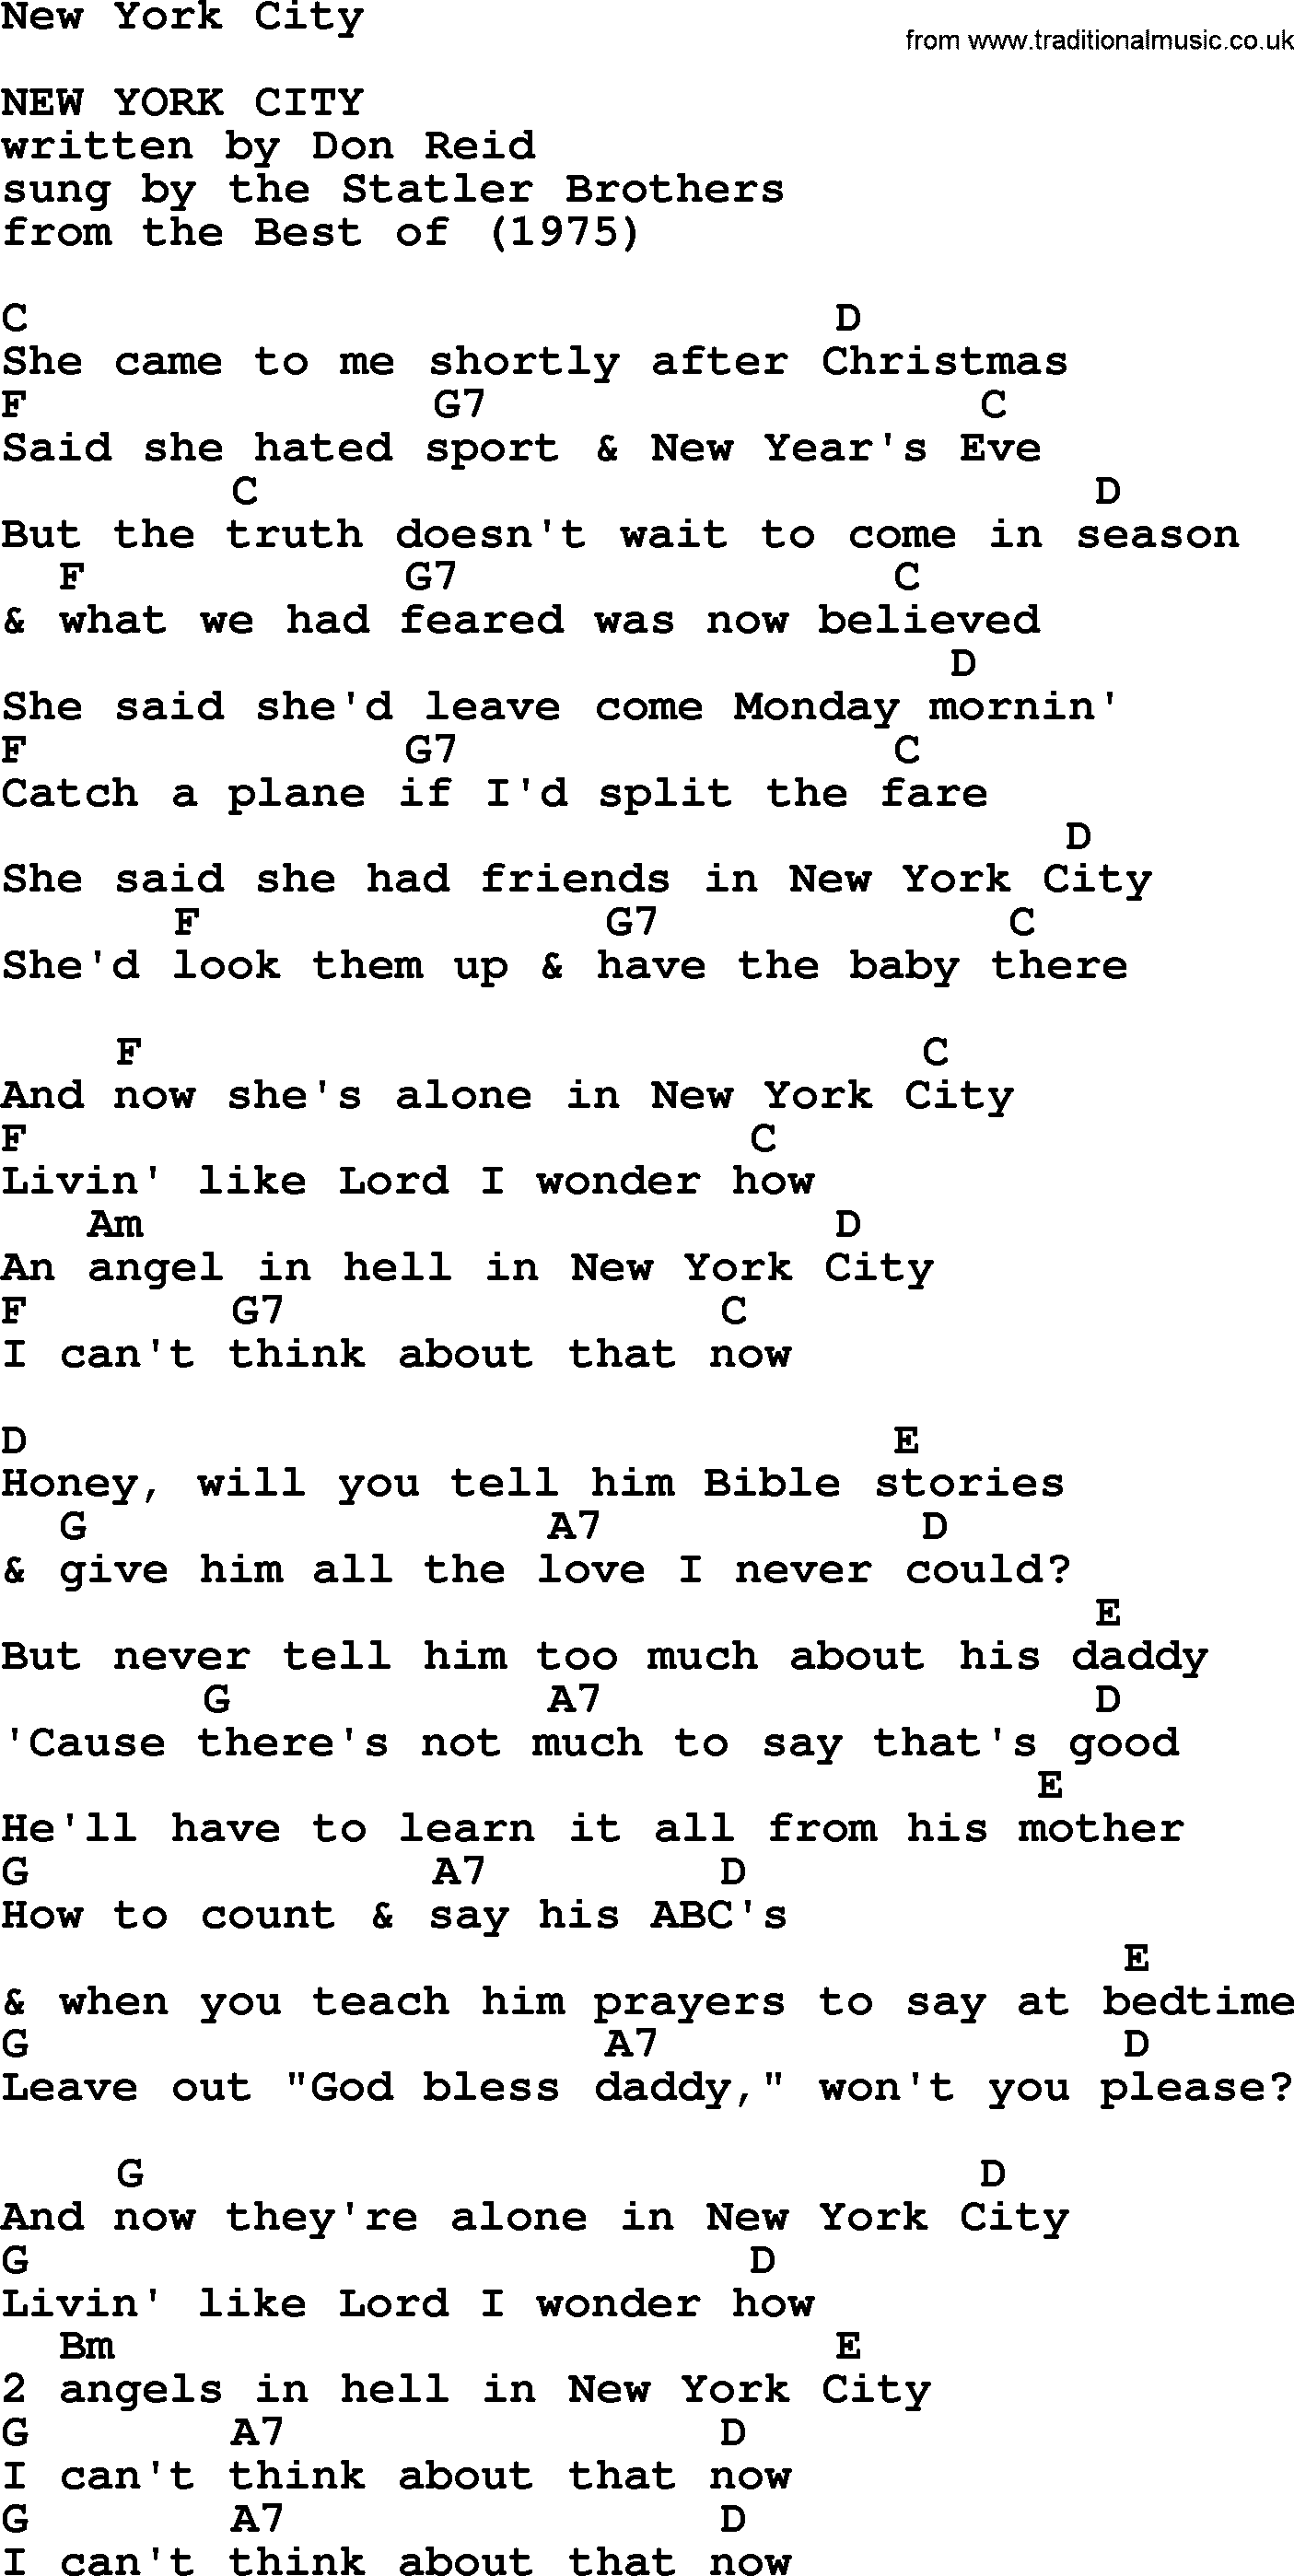 Bluegrass song: New York City, lyrics and chords